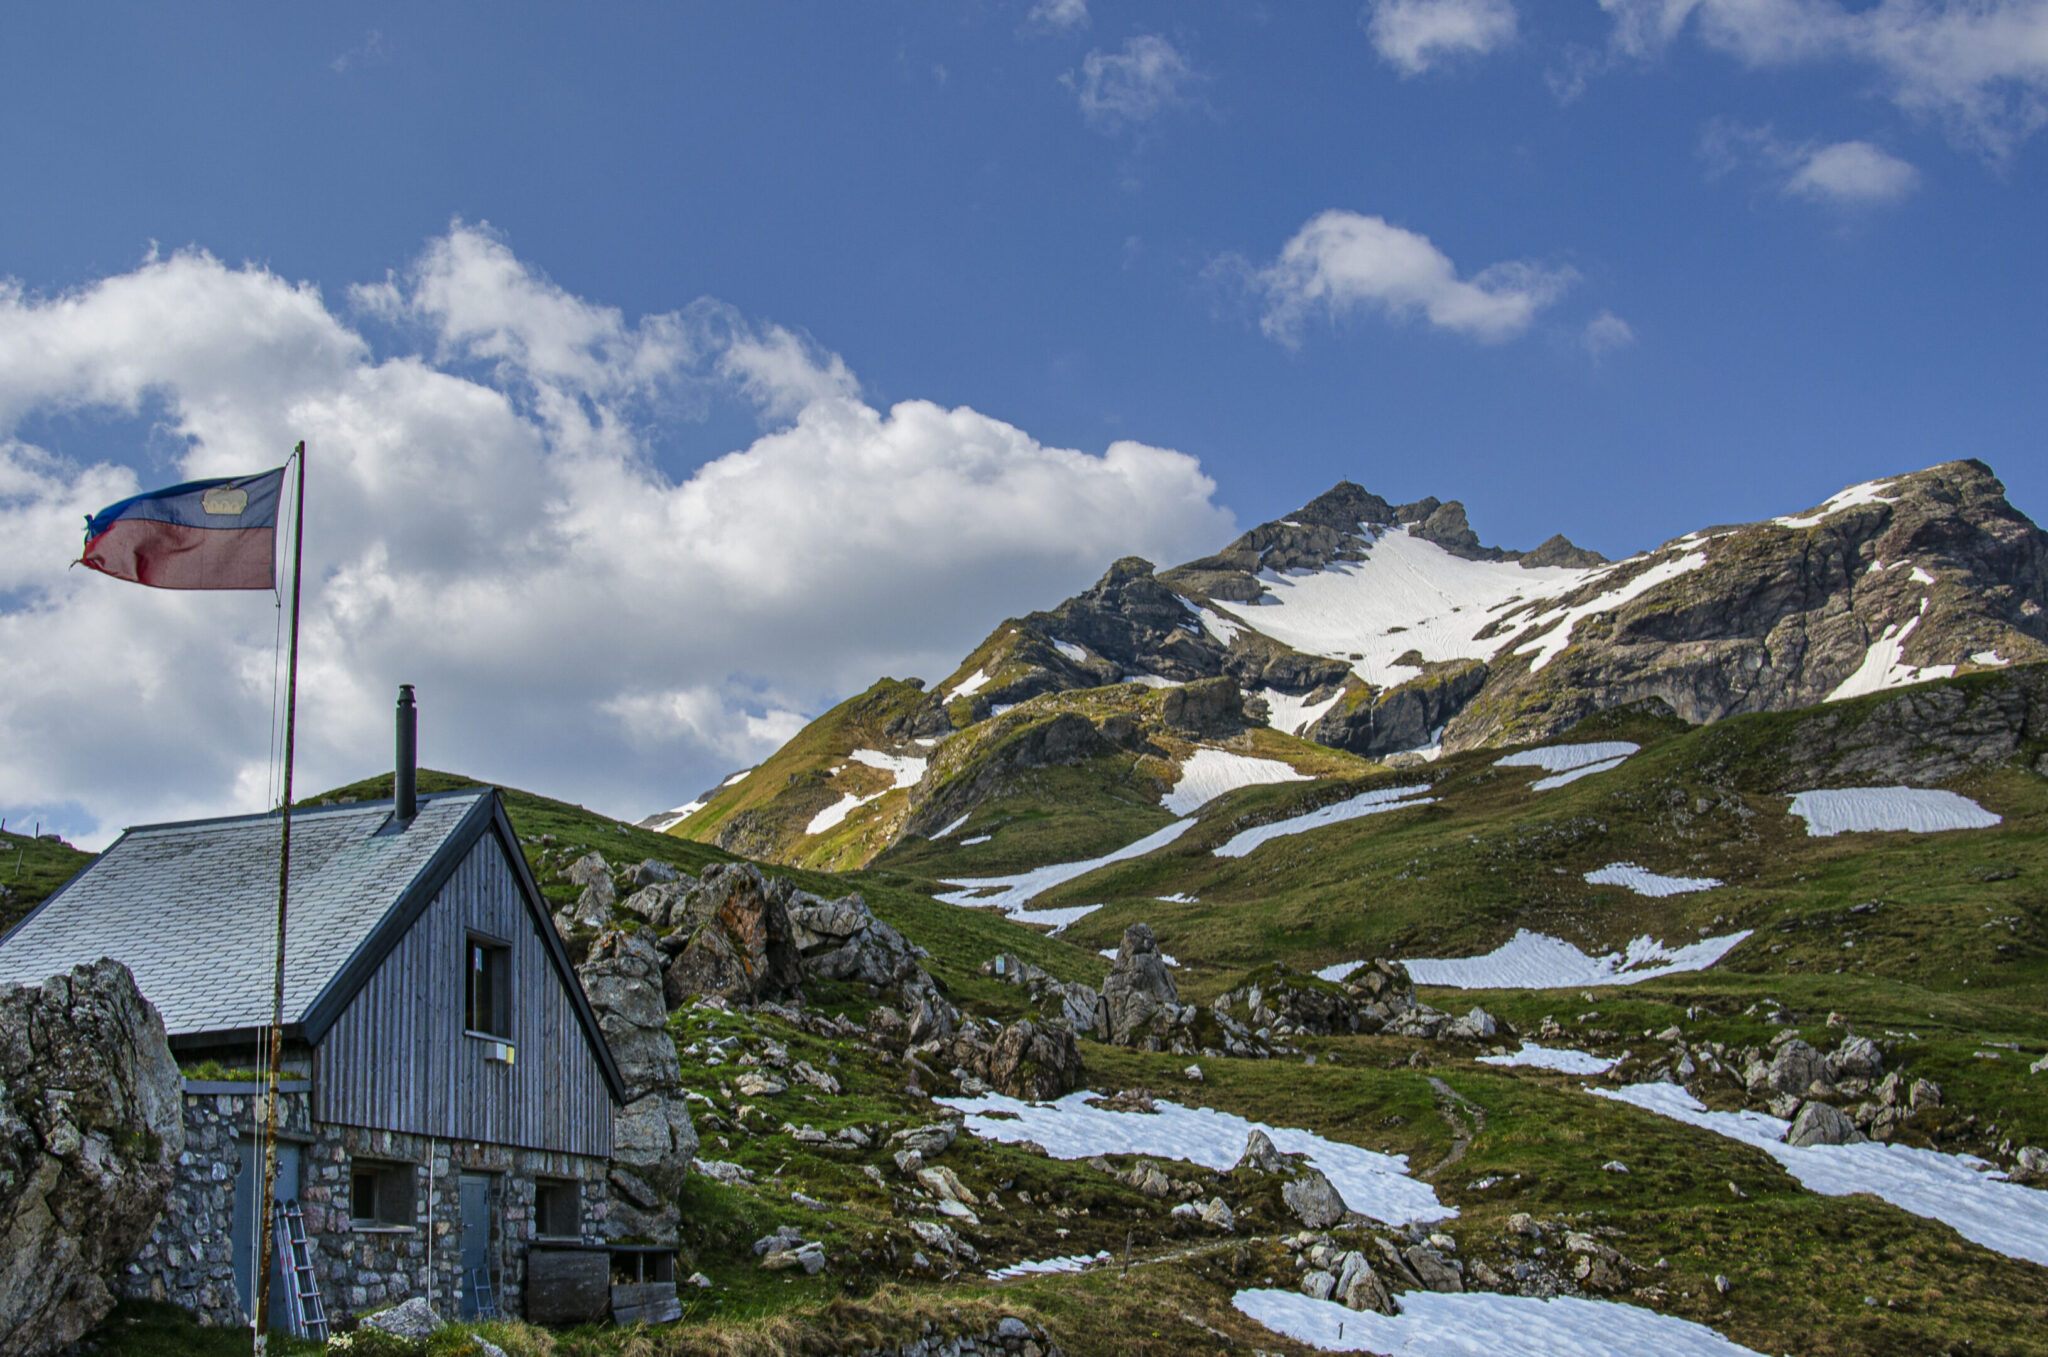 Pfälzerhütte, Naafkopf, Alps, Liechtenstein